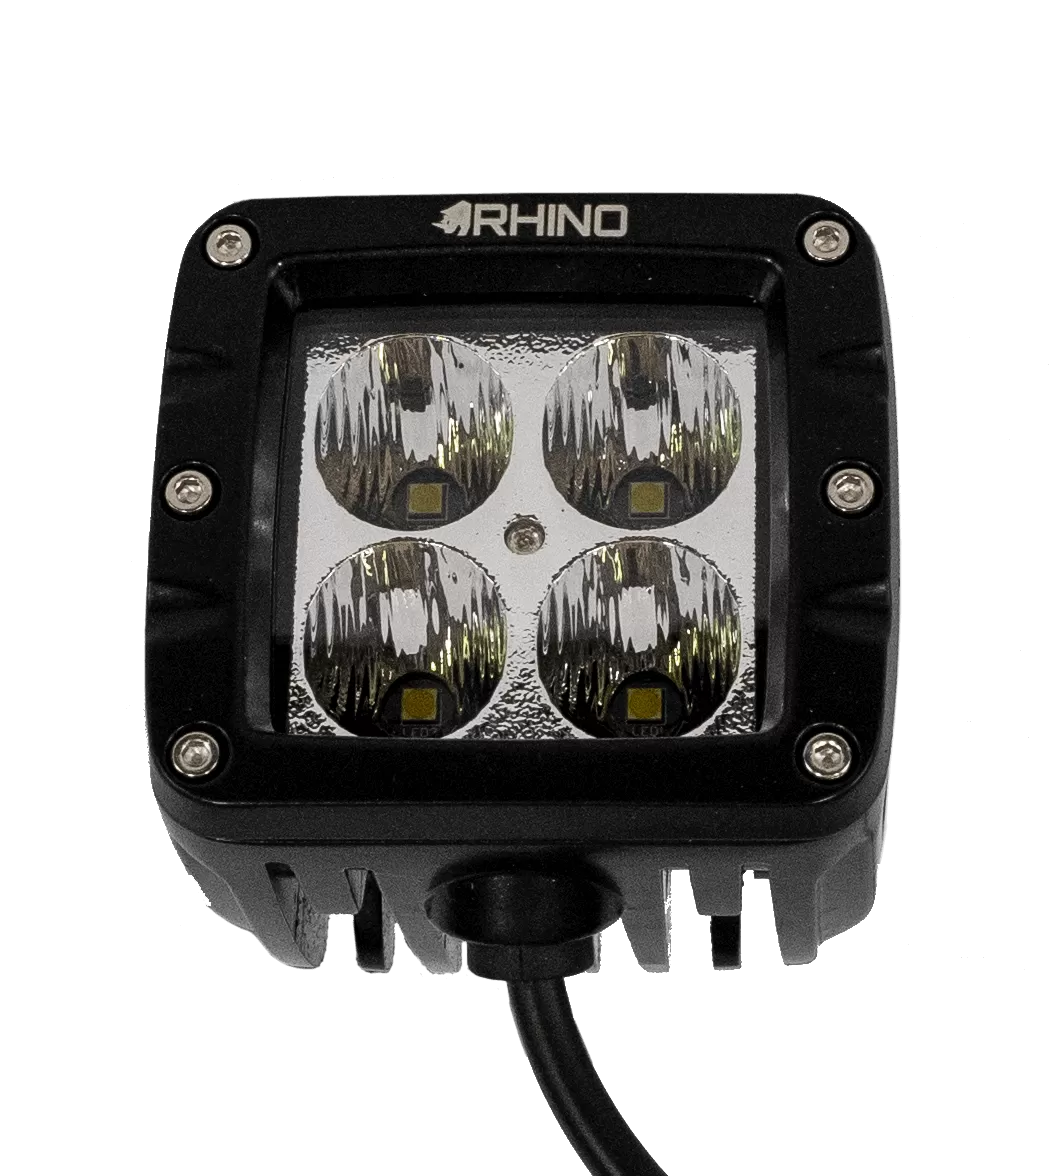 Rhino Lights 2800 Lumen 40w Osram LED Pod Work Light - Flood, Spot or Diffused - HML240F